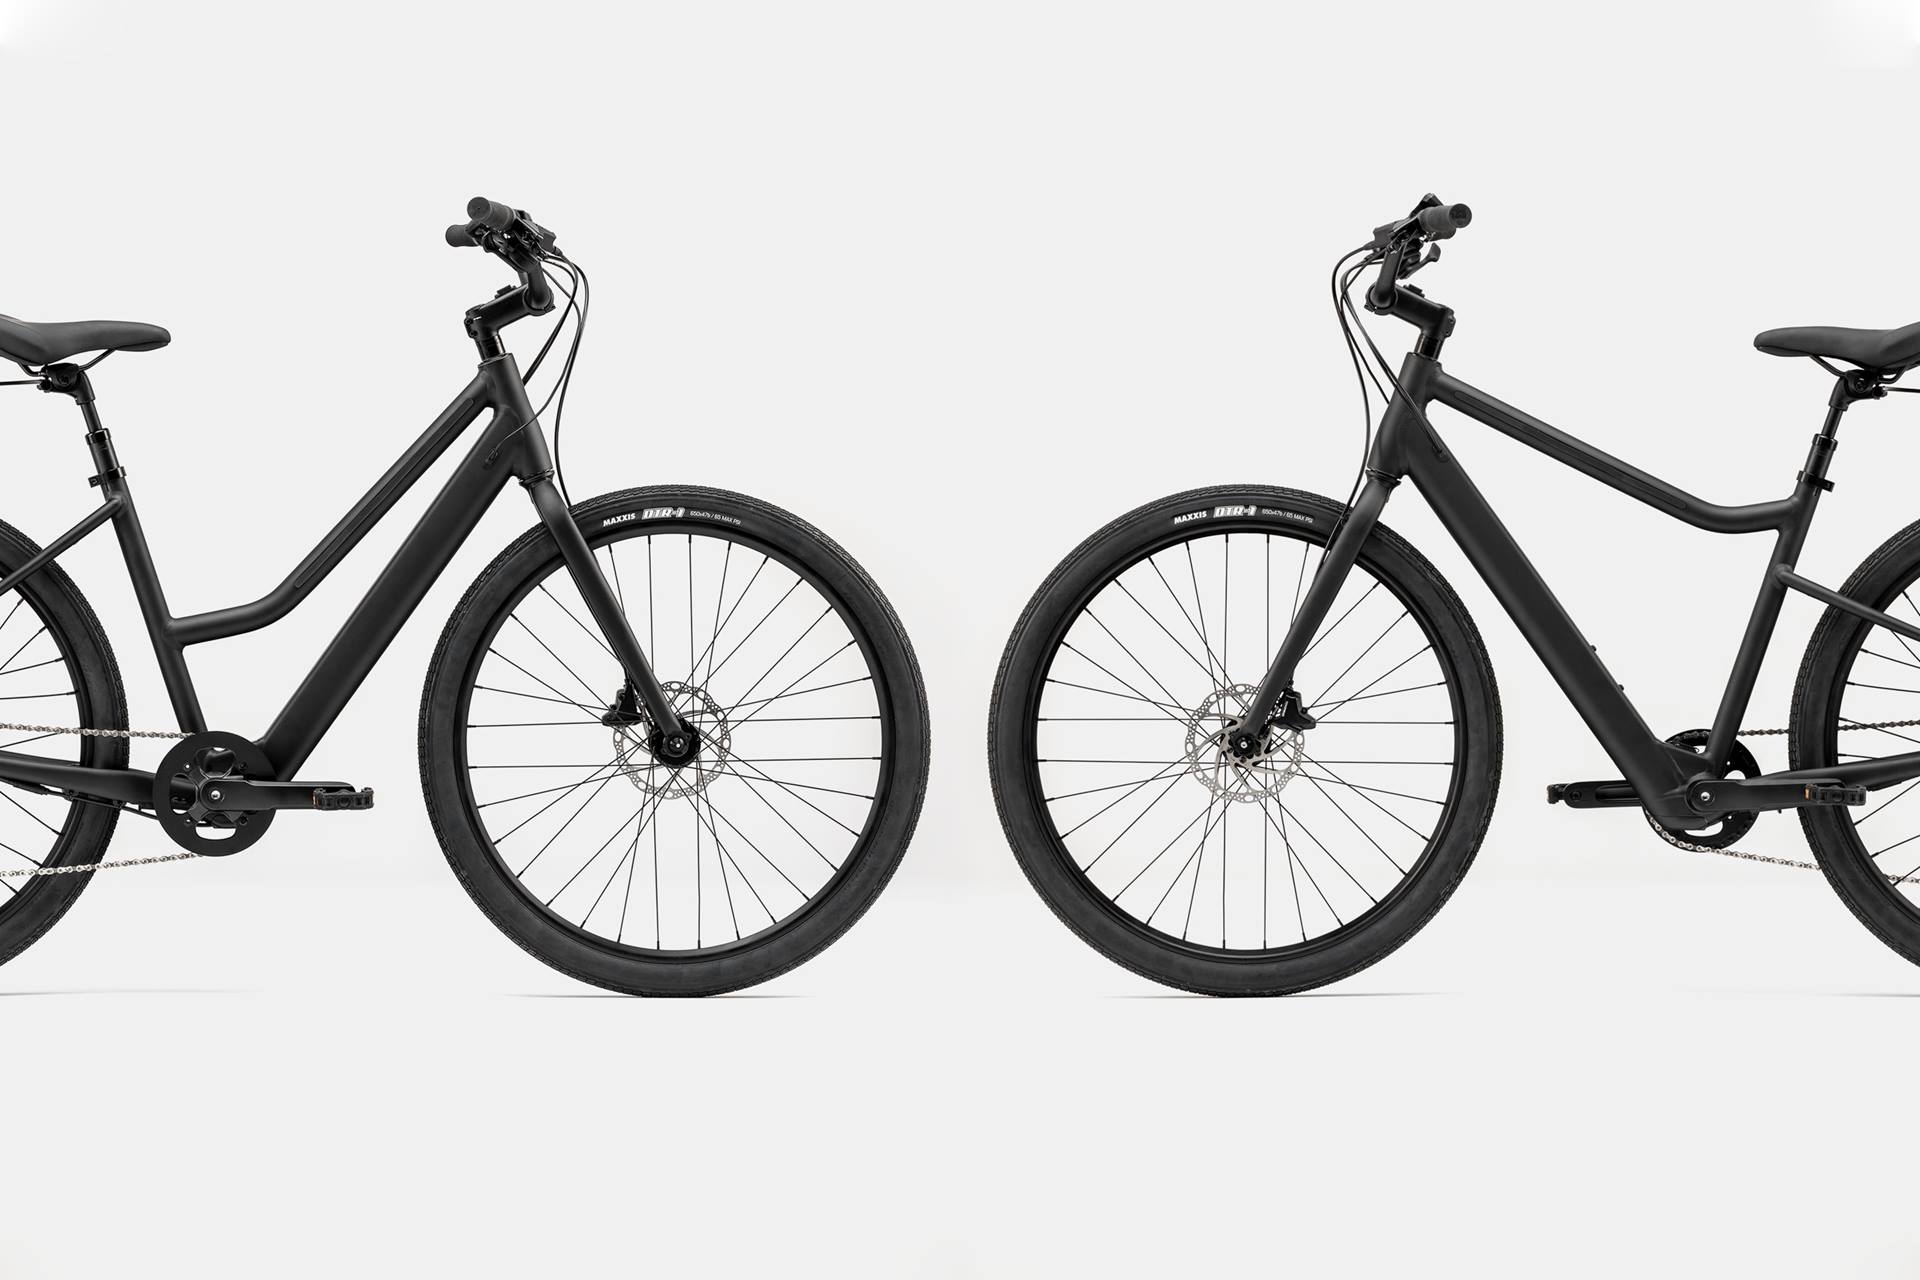 bicycle wheel